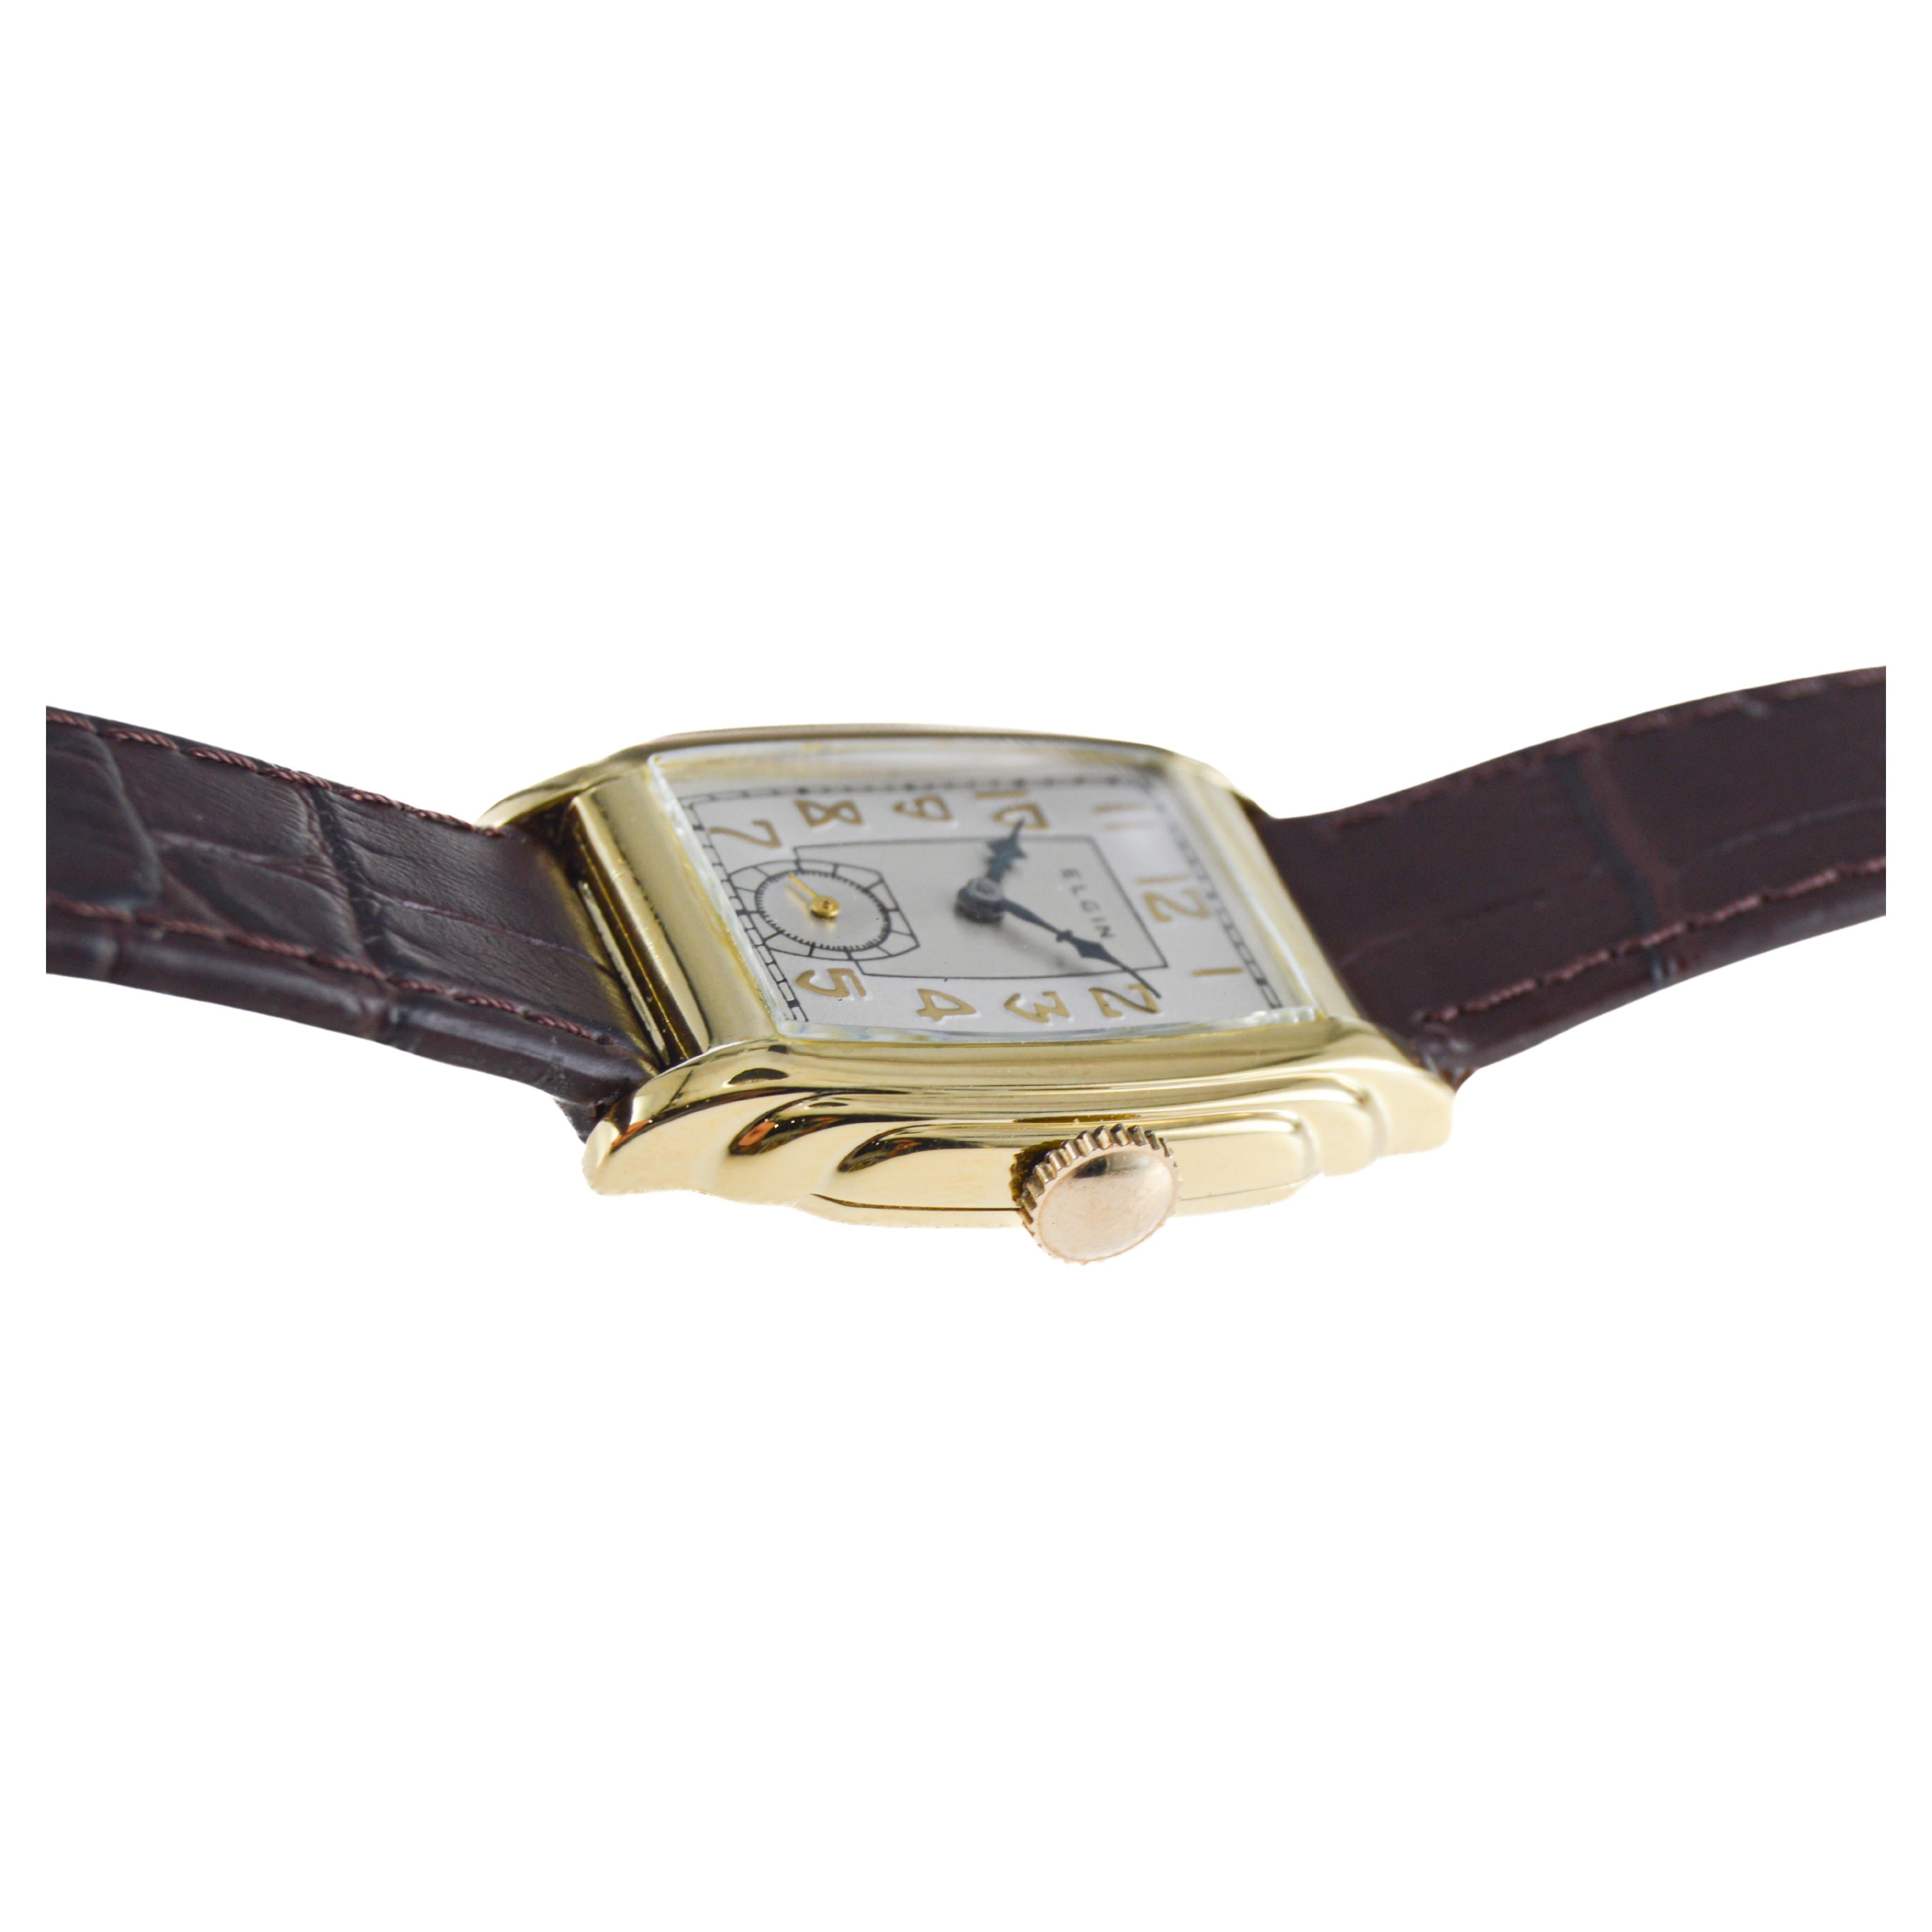 Elgin Yellow Gold Filled Tonneau Shape Watch Circa 1931 with Original Dial 6